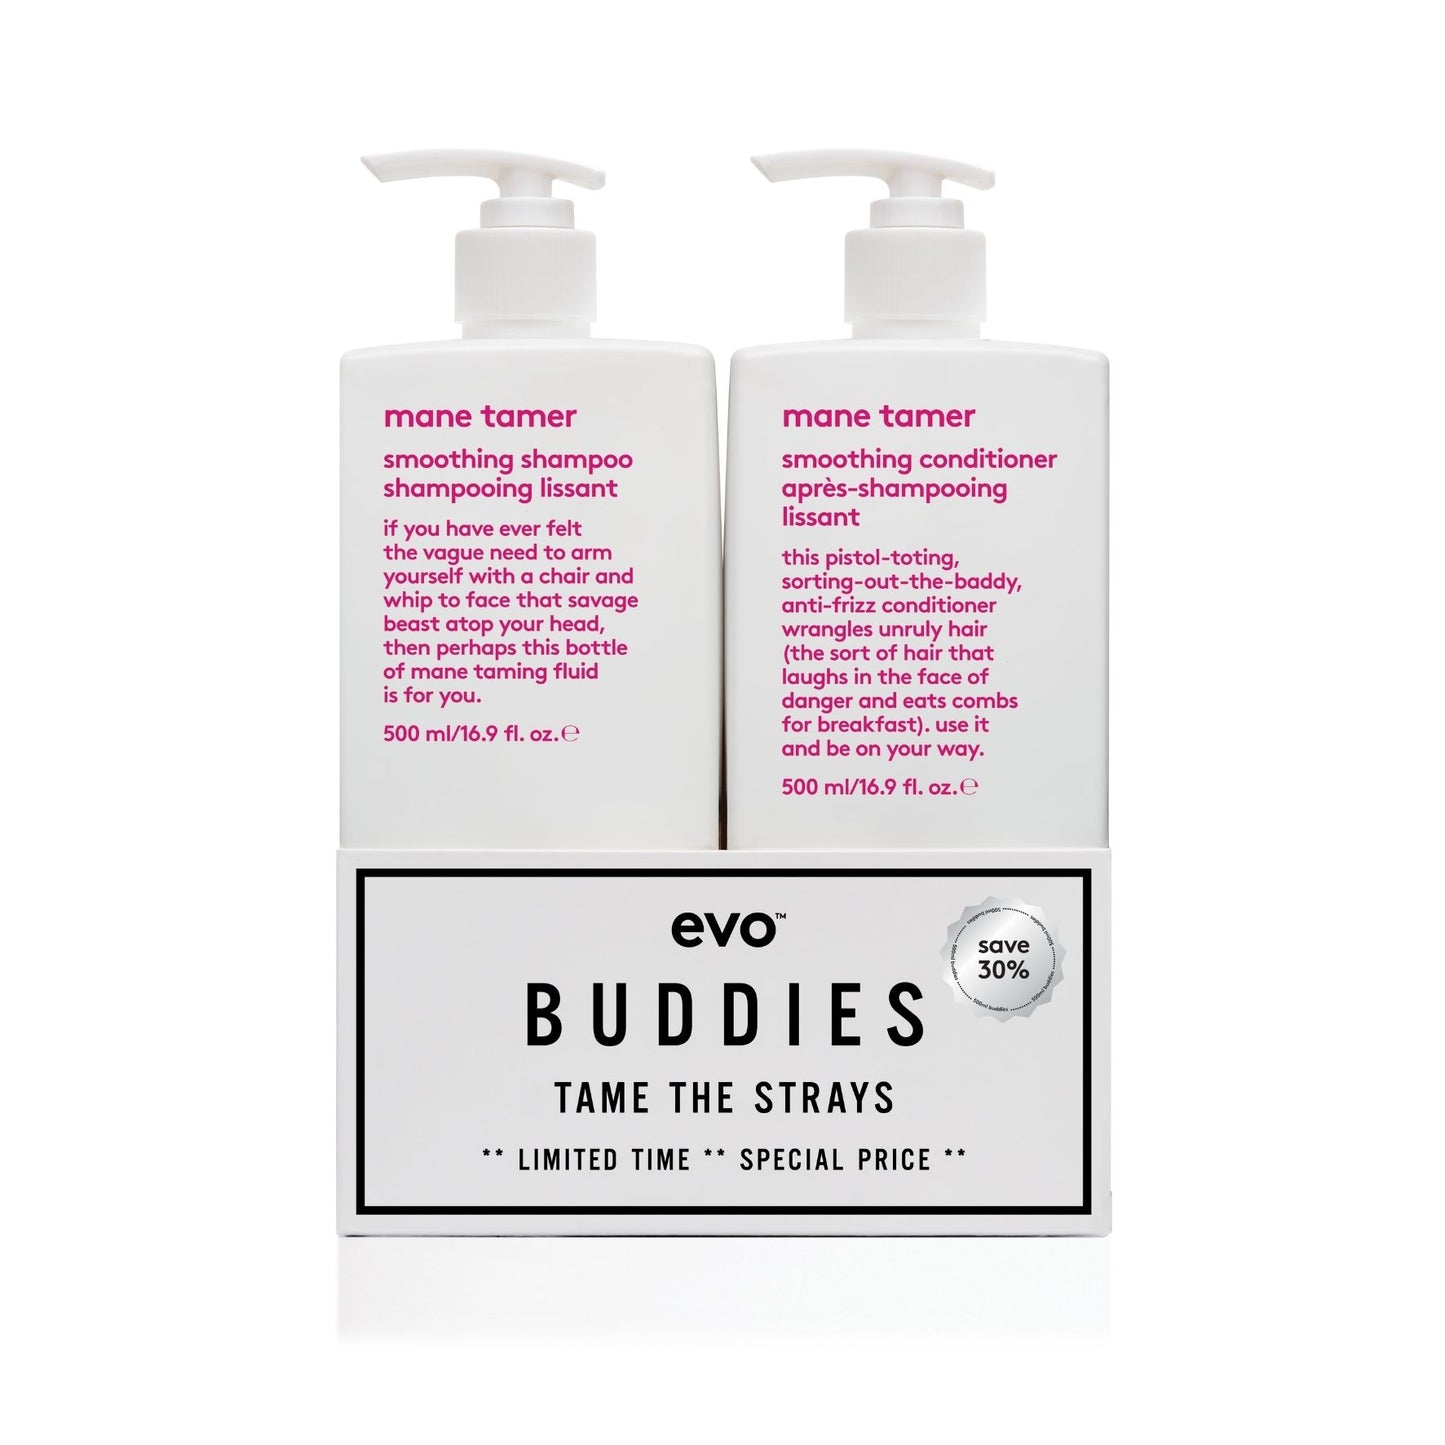 Mane Tamer Buddies - 500ml Shampoo and Conditioner